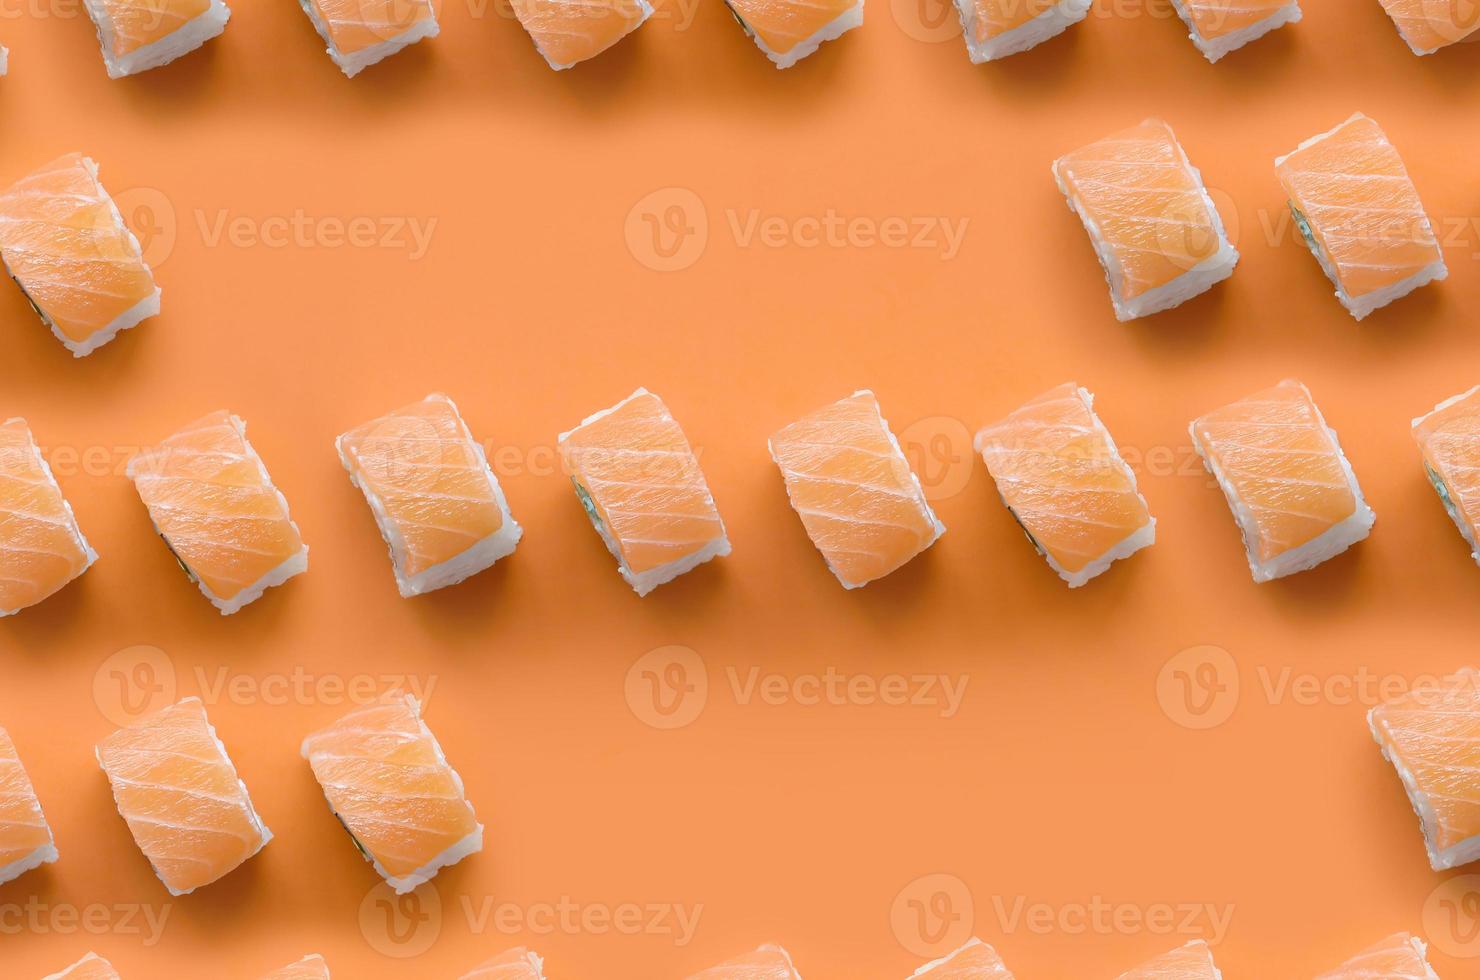 Philadelphia rolls with salmon on orange background. Minimalism top view flat lay pattern with Japanese food photo